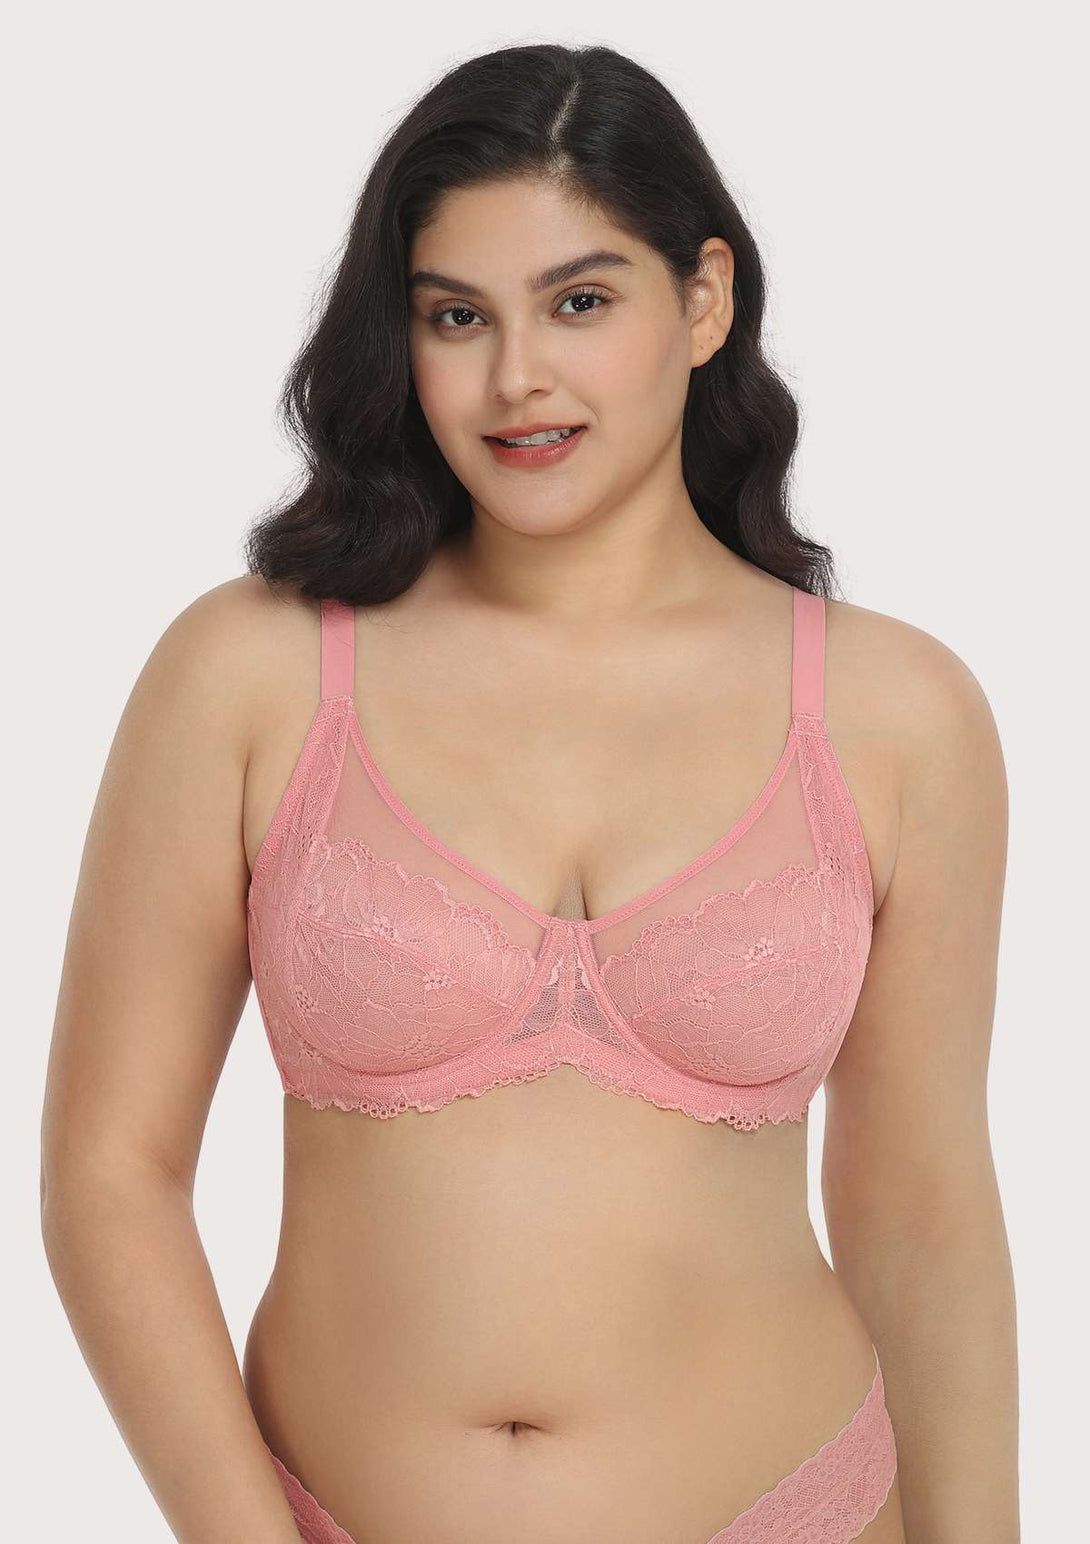 Pink Bra size 34C  Pink bra, Bra sizes, Pink